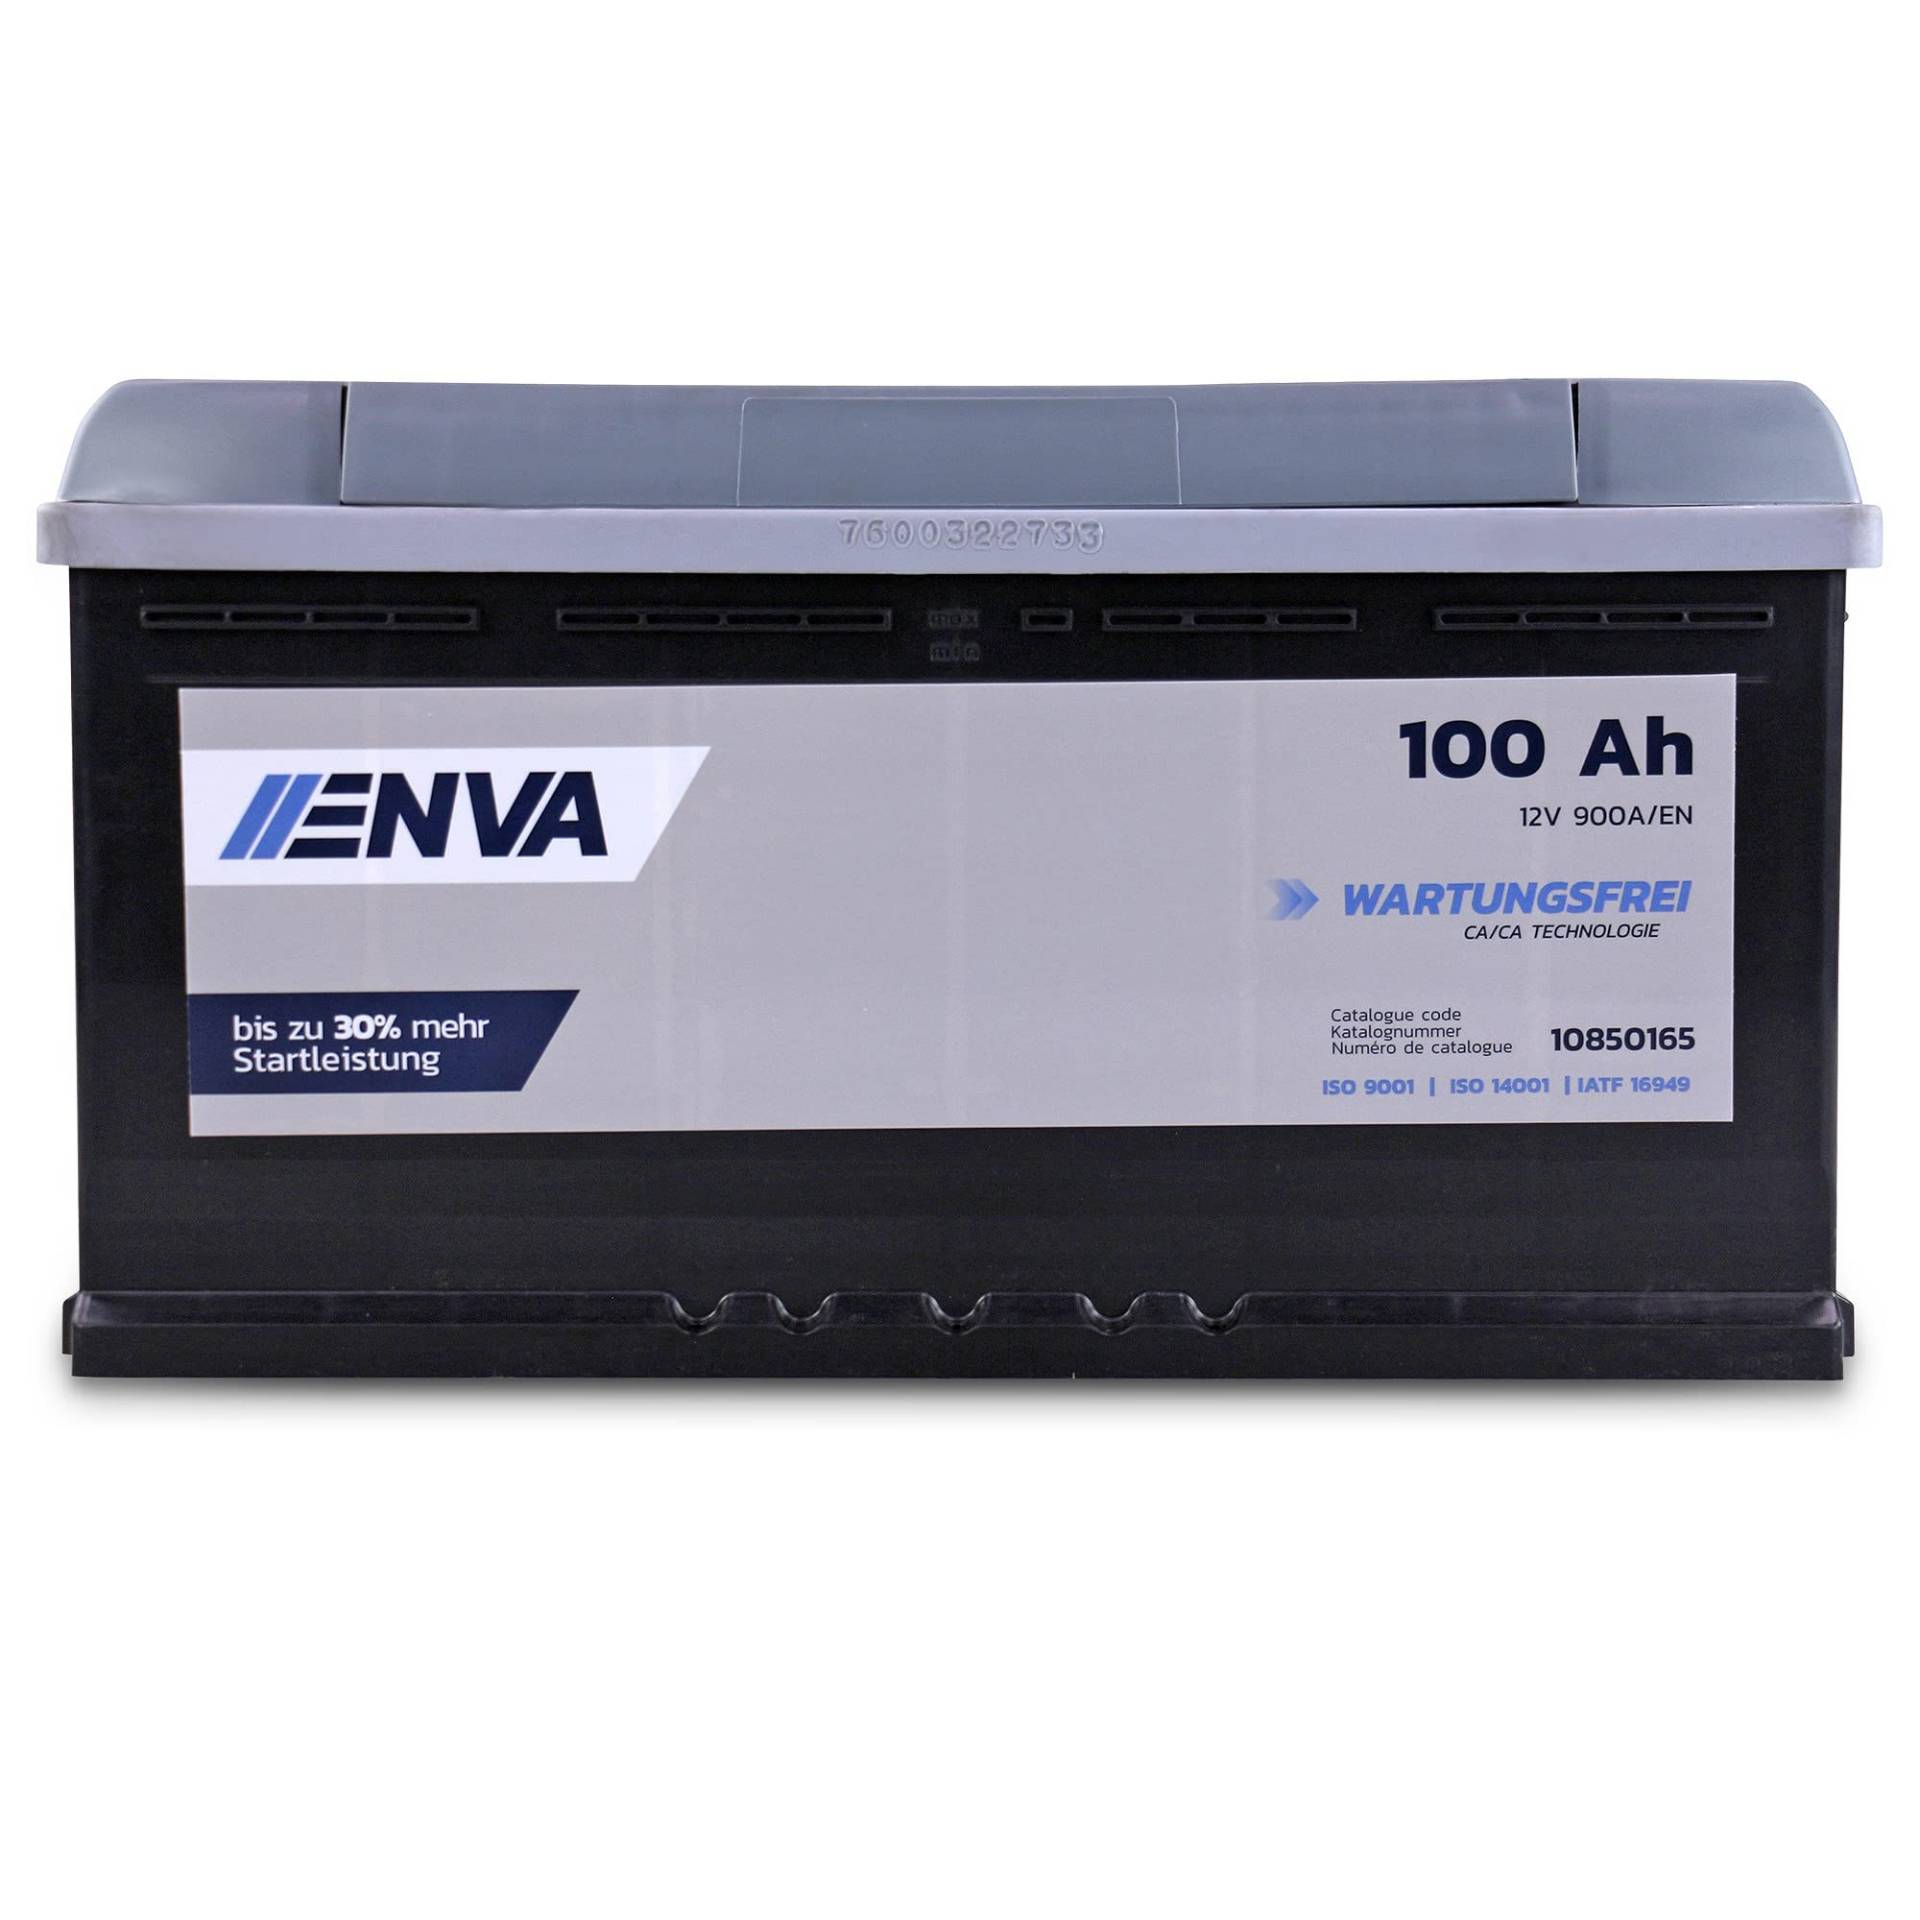 ENVA Autobatterie 12V 100Ah 900A Starterbatterie PKW Batterie Wartungsfrei +30% Startleistung - Ersetzt 88Ah 90Ah 95Ah 110Ah 120Ah mit Magic-Eye, Feuerschutz und Kurzschlussschutz von ENVA MADE FOR QUALITY